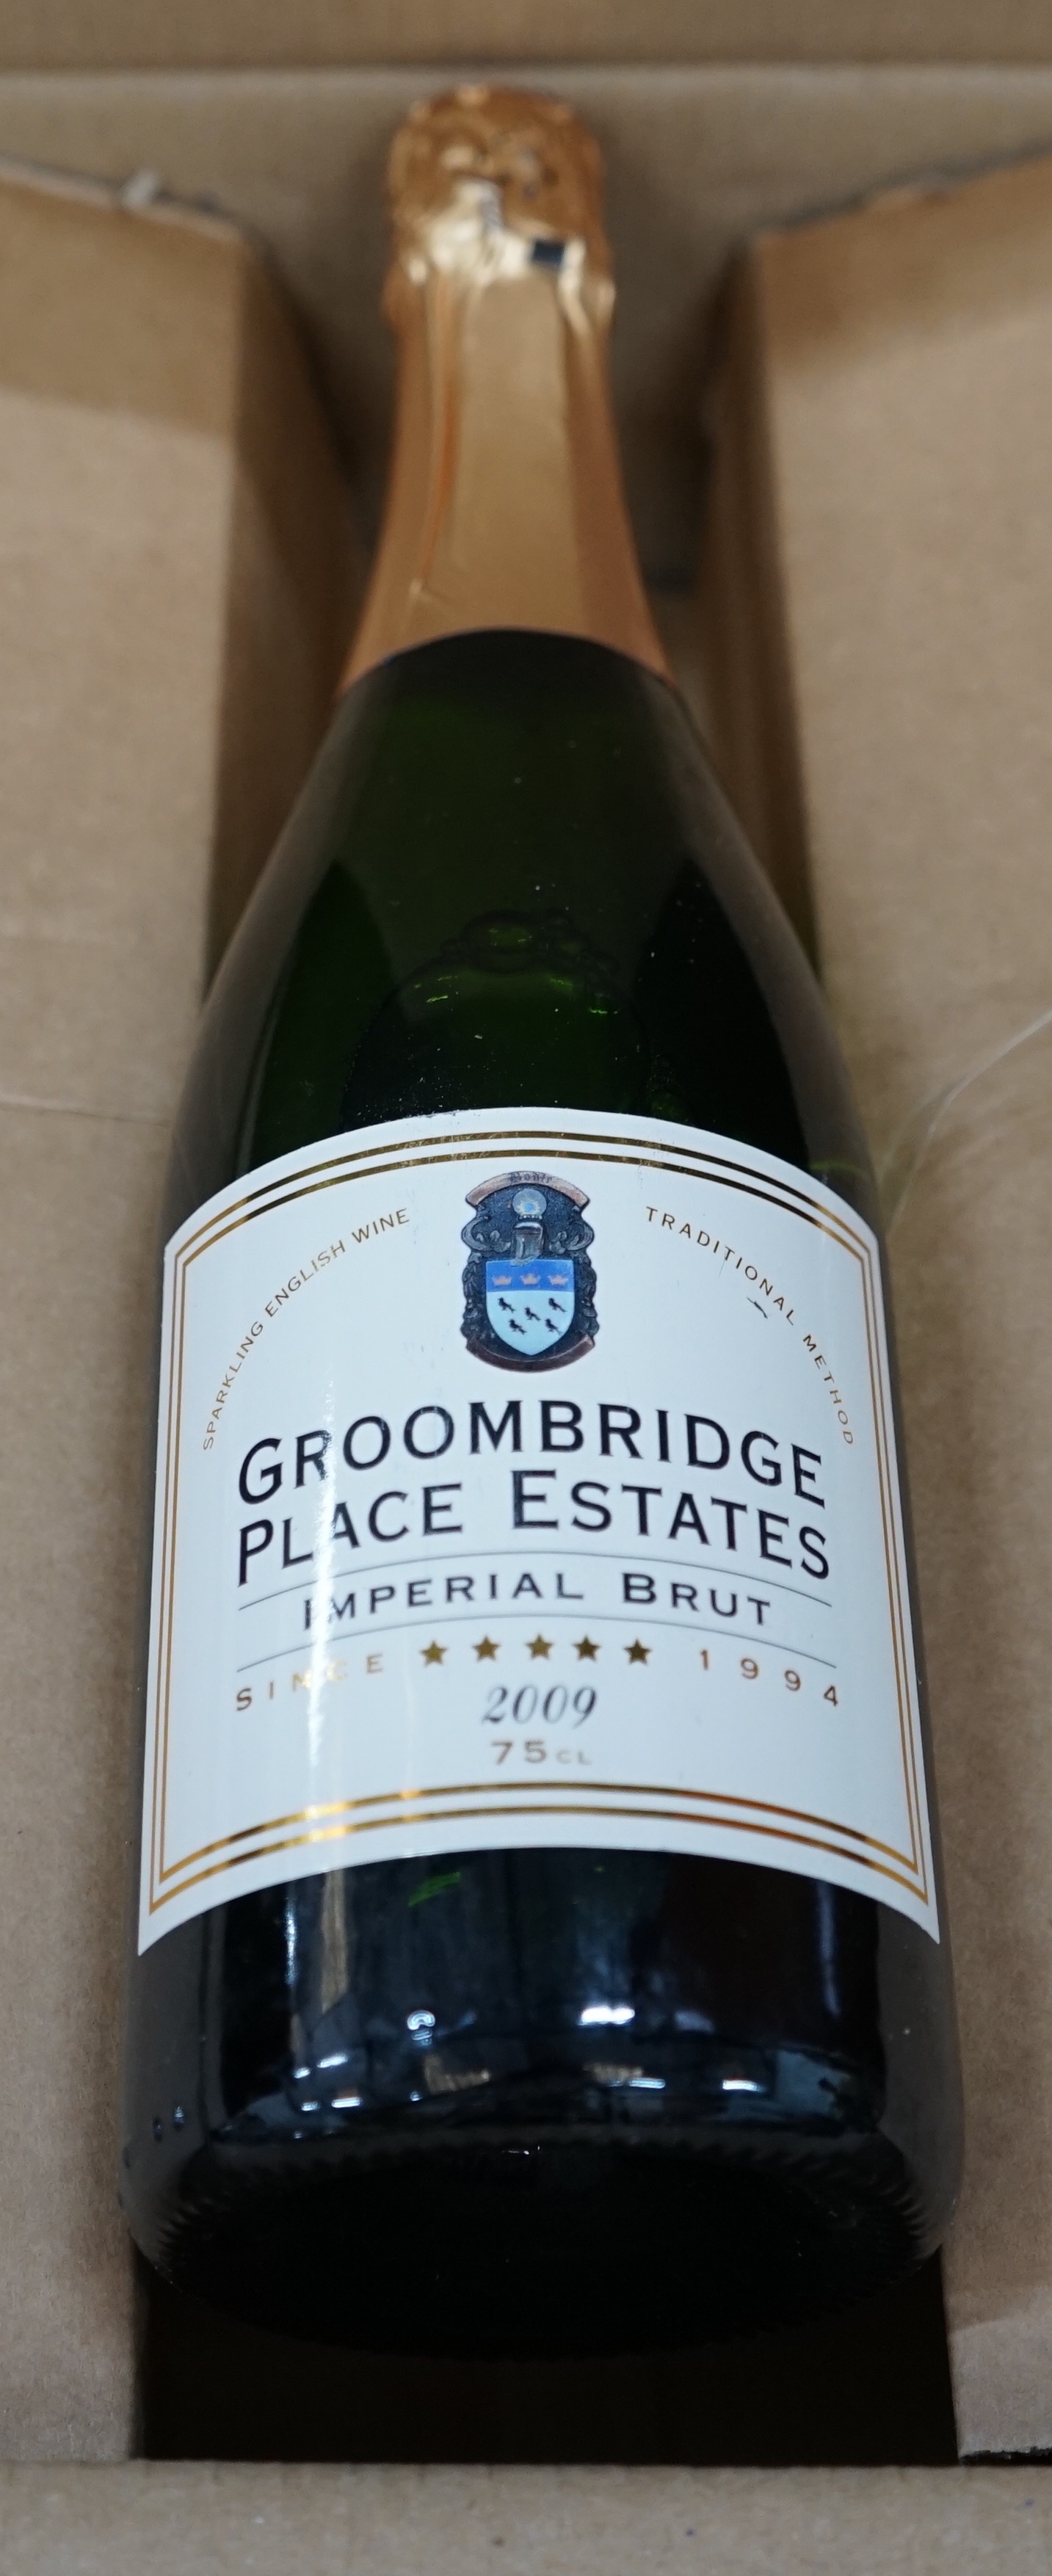 Twelve bottles of Groombridge Place Estate Imperial Brut 2009 English sparkling wine